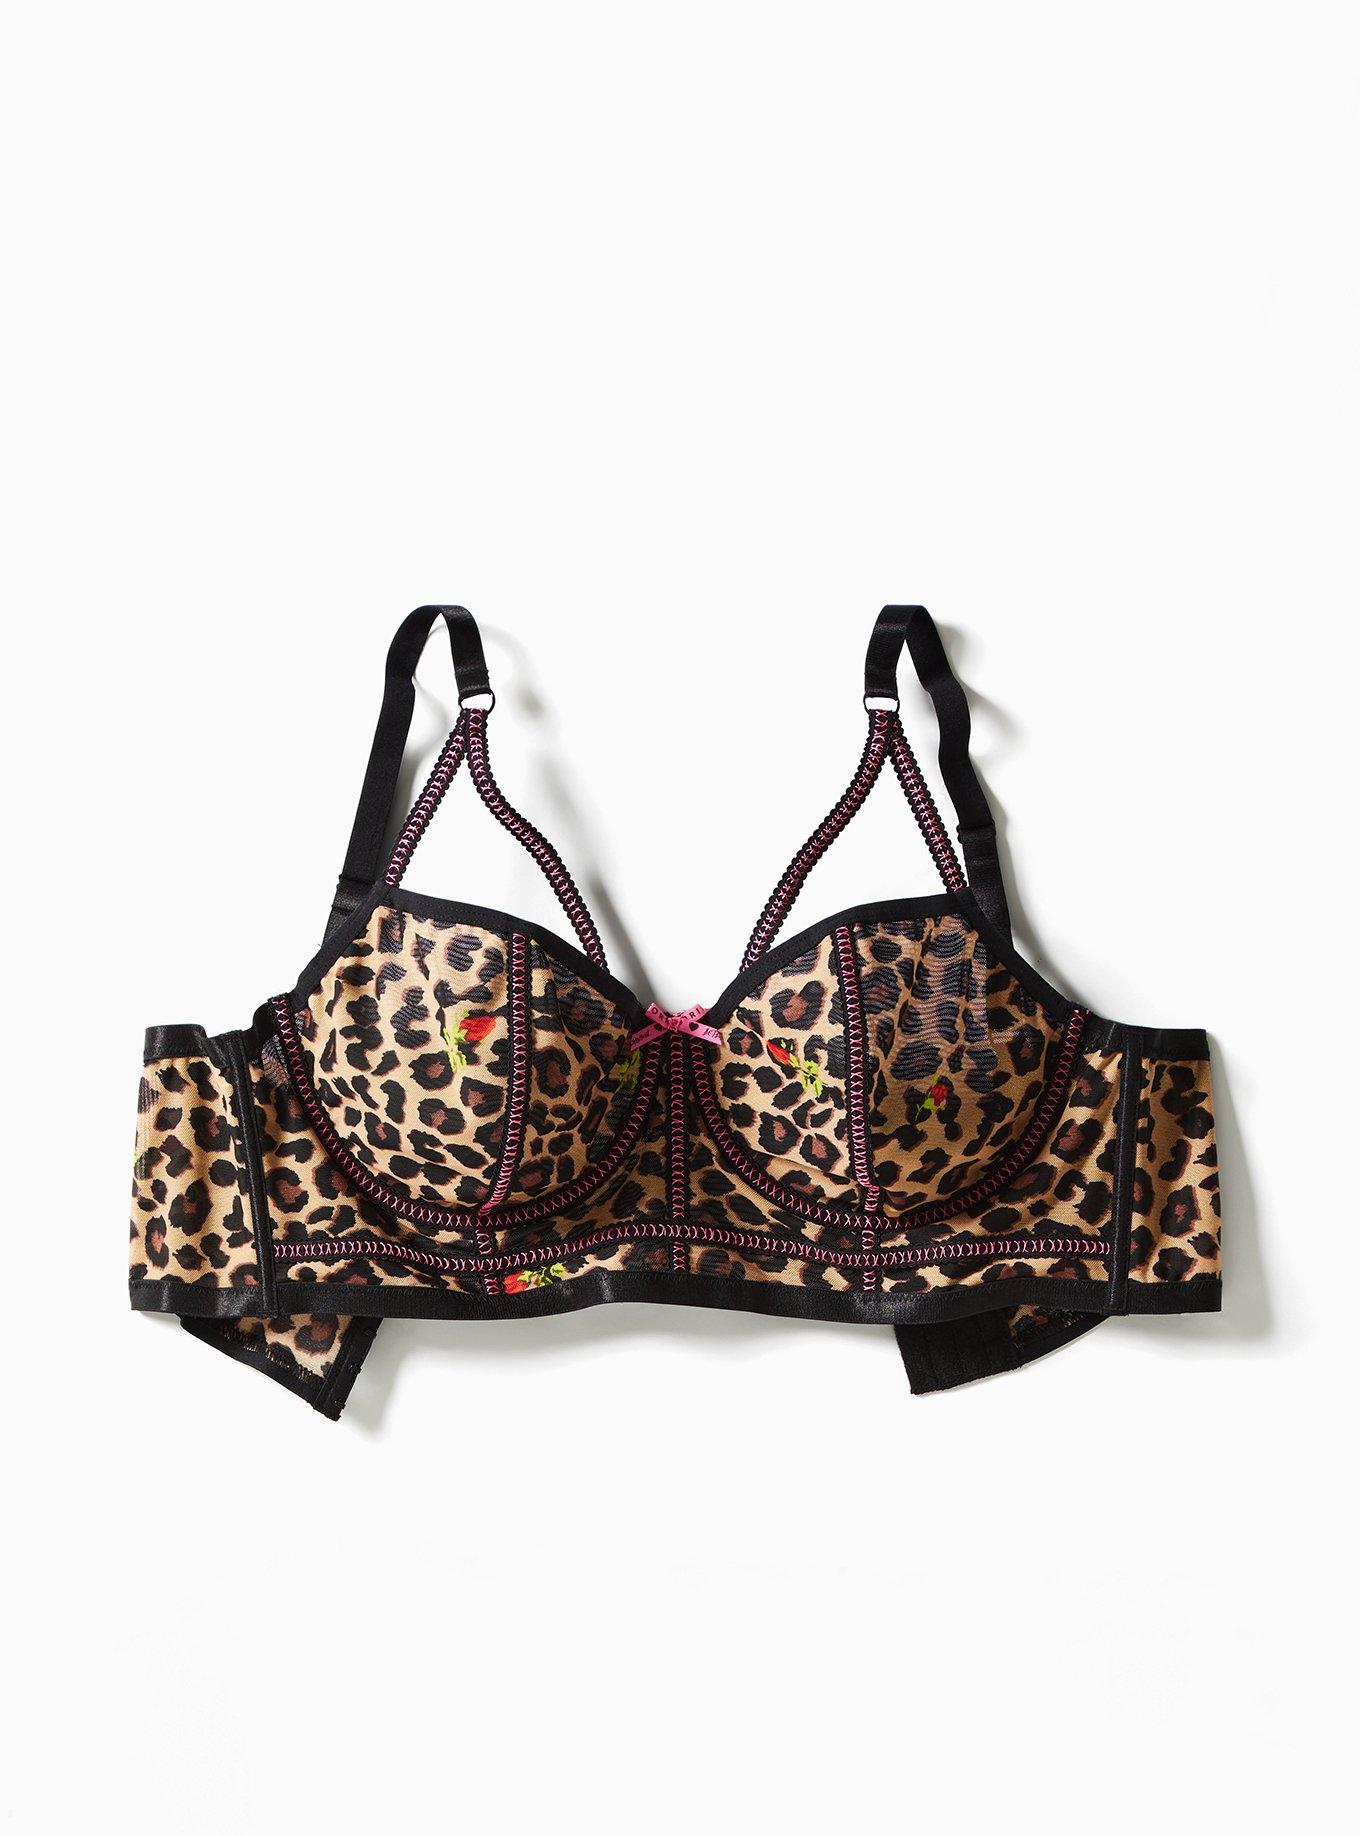 Victoria Secret Leopard Print Bras  Leopard print bra, Printed bras,  Leopard print